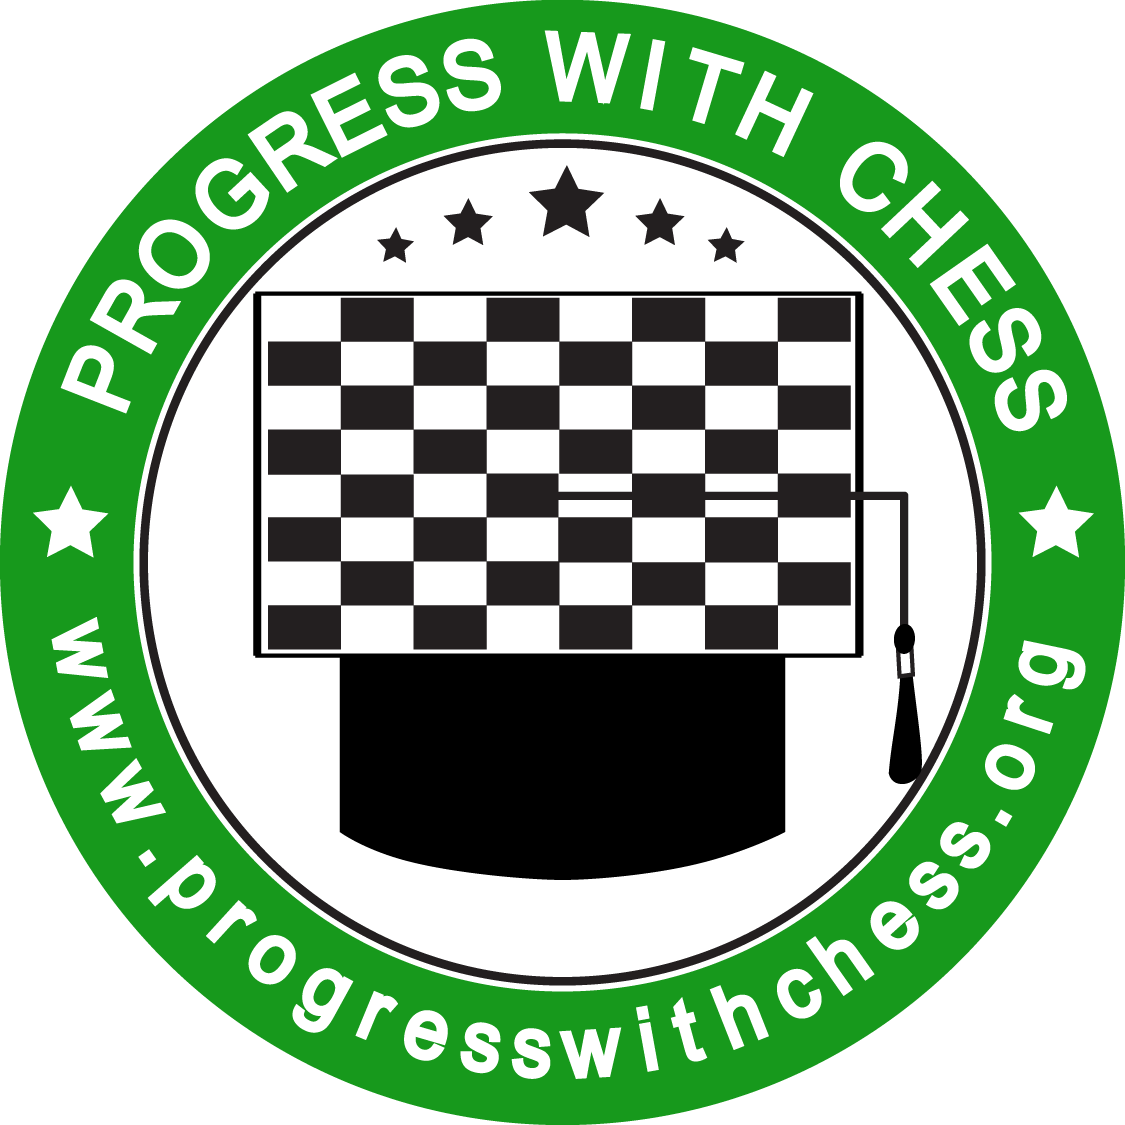 Progress With Chess Logo